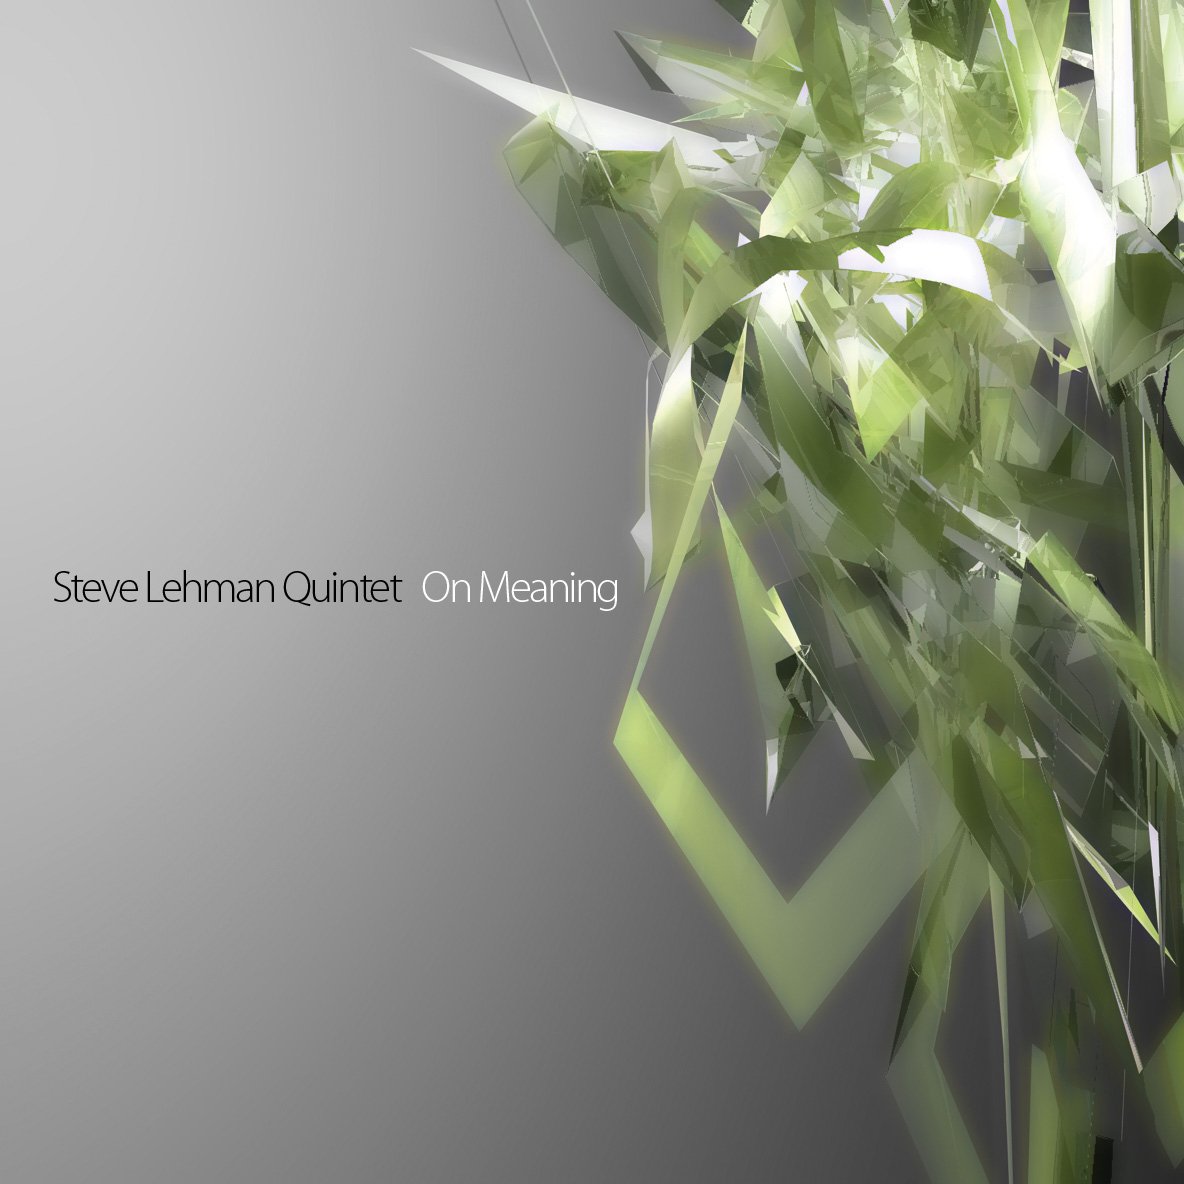 On Meaning - Steve Lehman Quintet